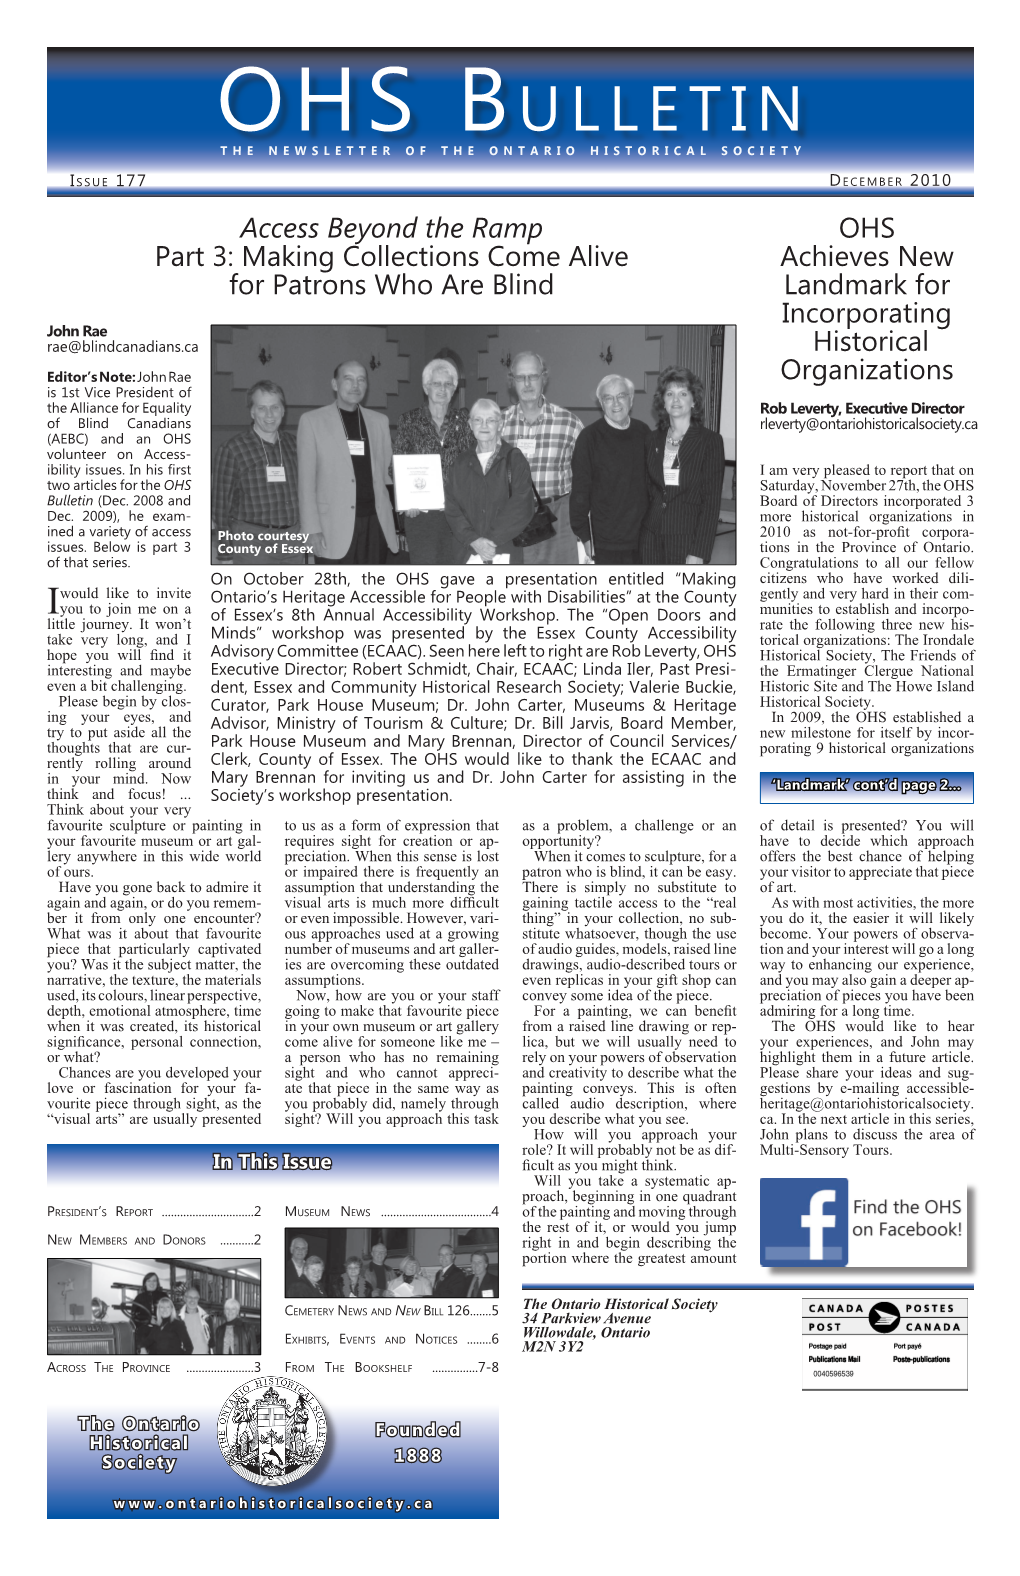 December 2010 OHS Bulletin, Issue